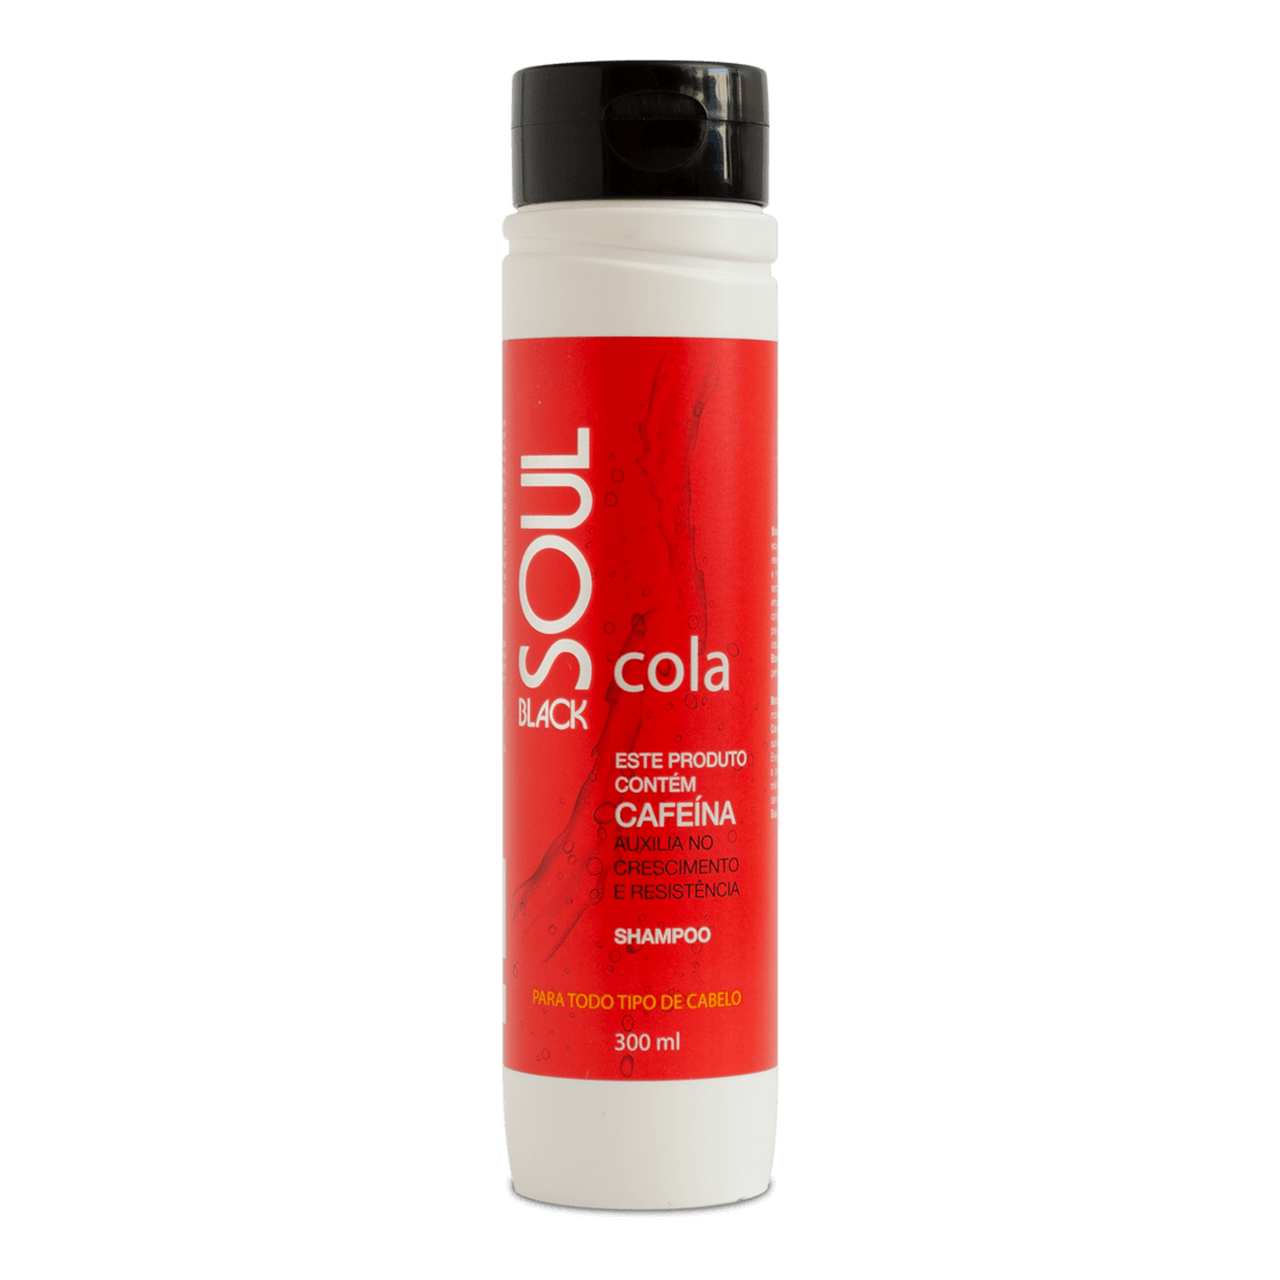 ASP Hair Care Soul Black Cola Shampoo 300ML - ASP